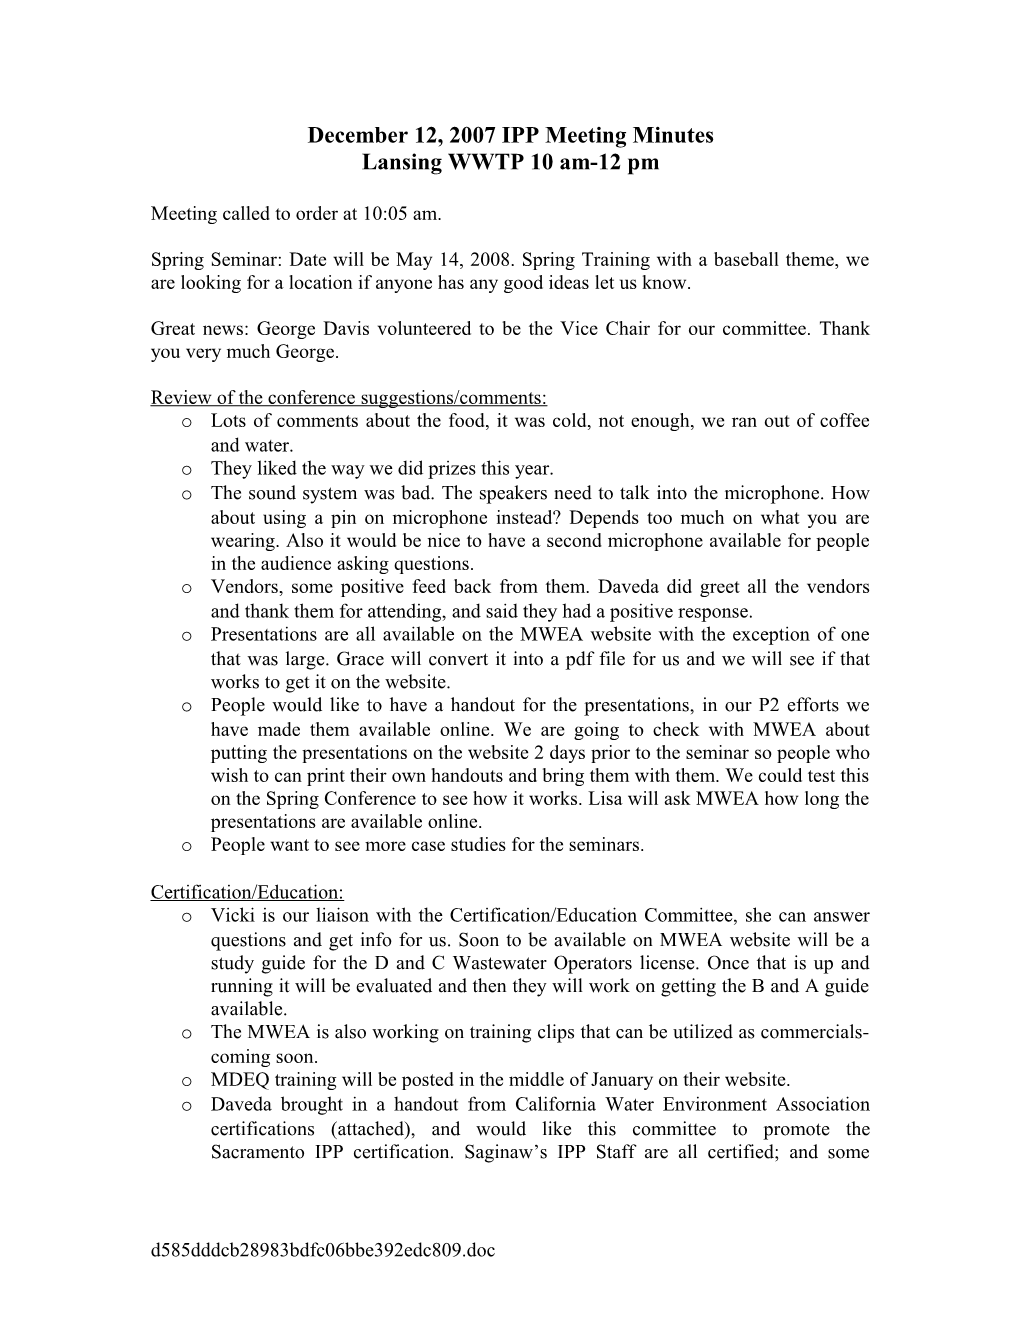 8-8-2007 IPP Meeting Minutes Lansing WWTP 10AM-12 Noon